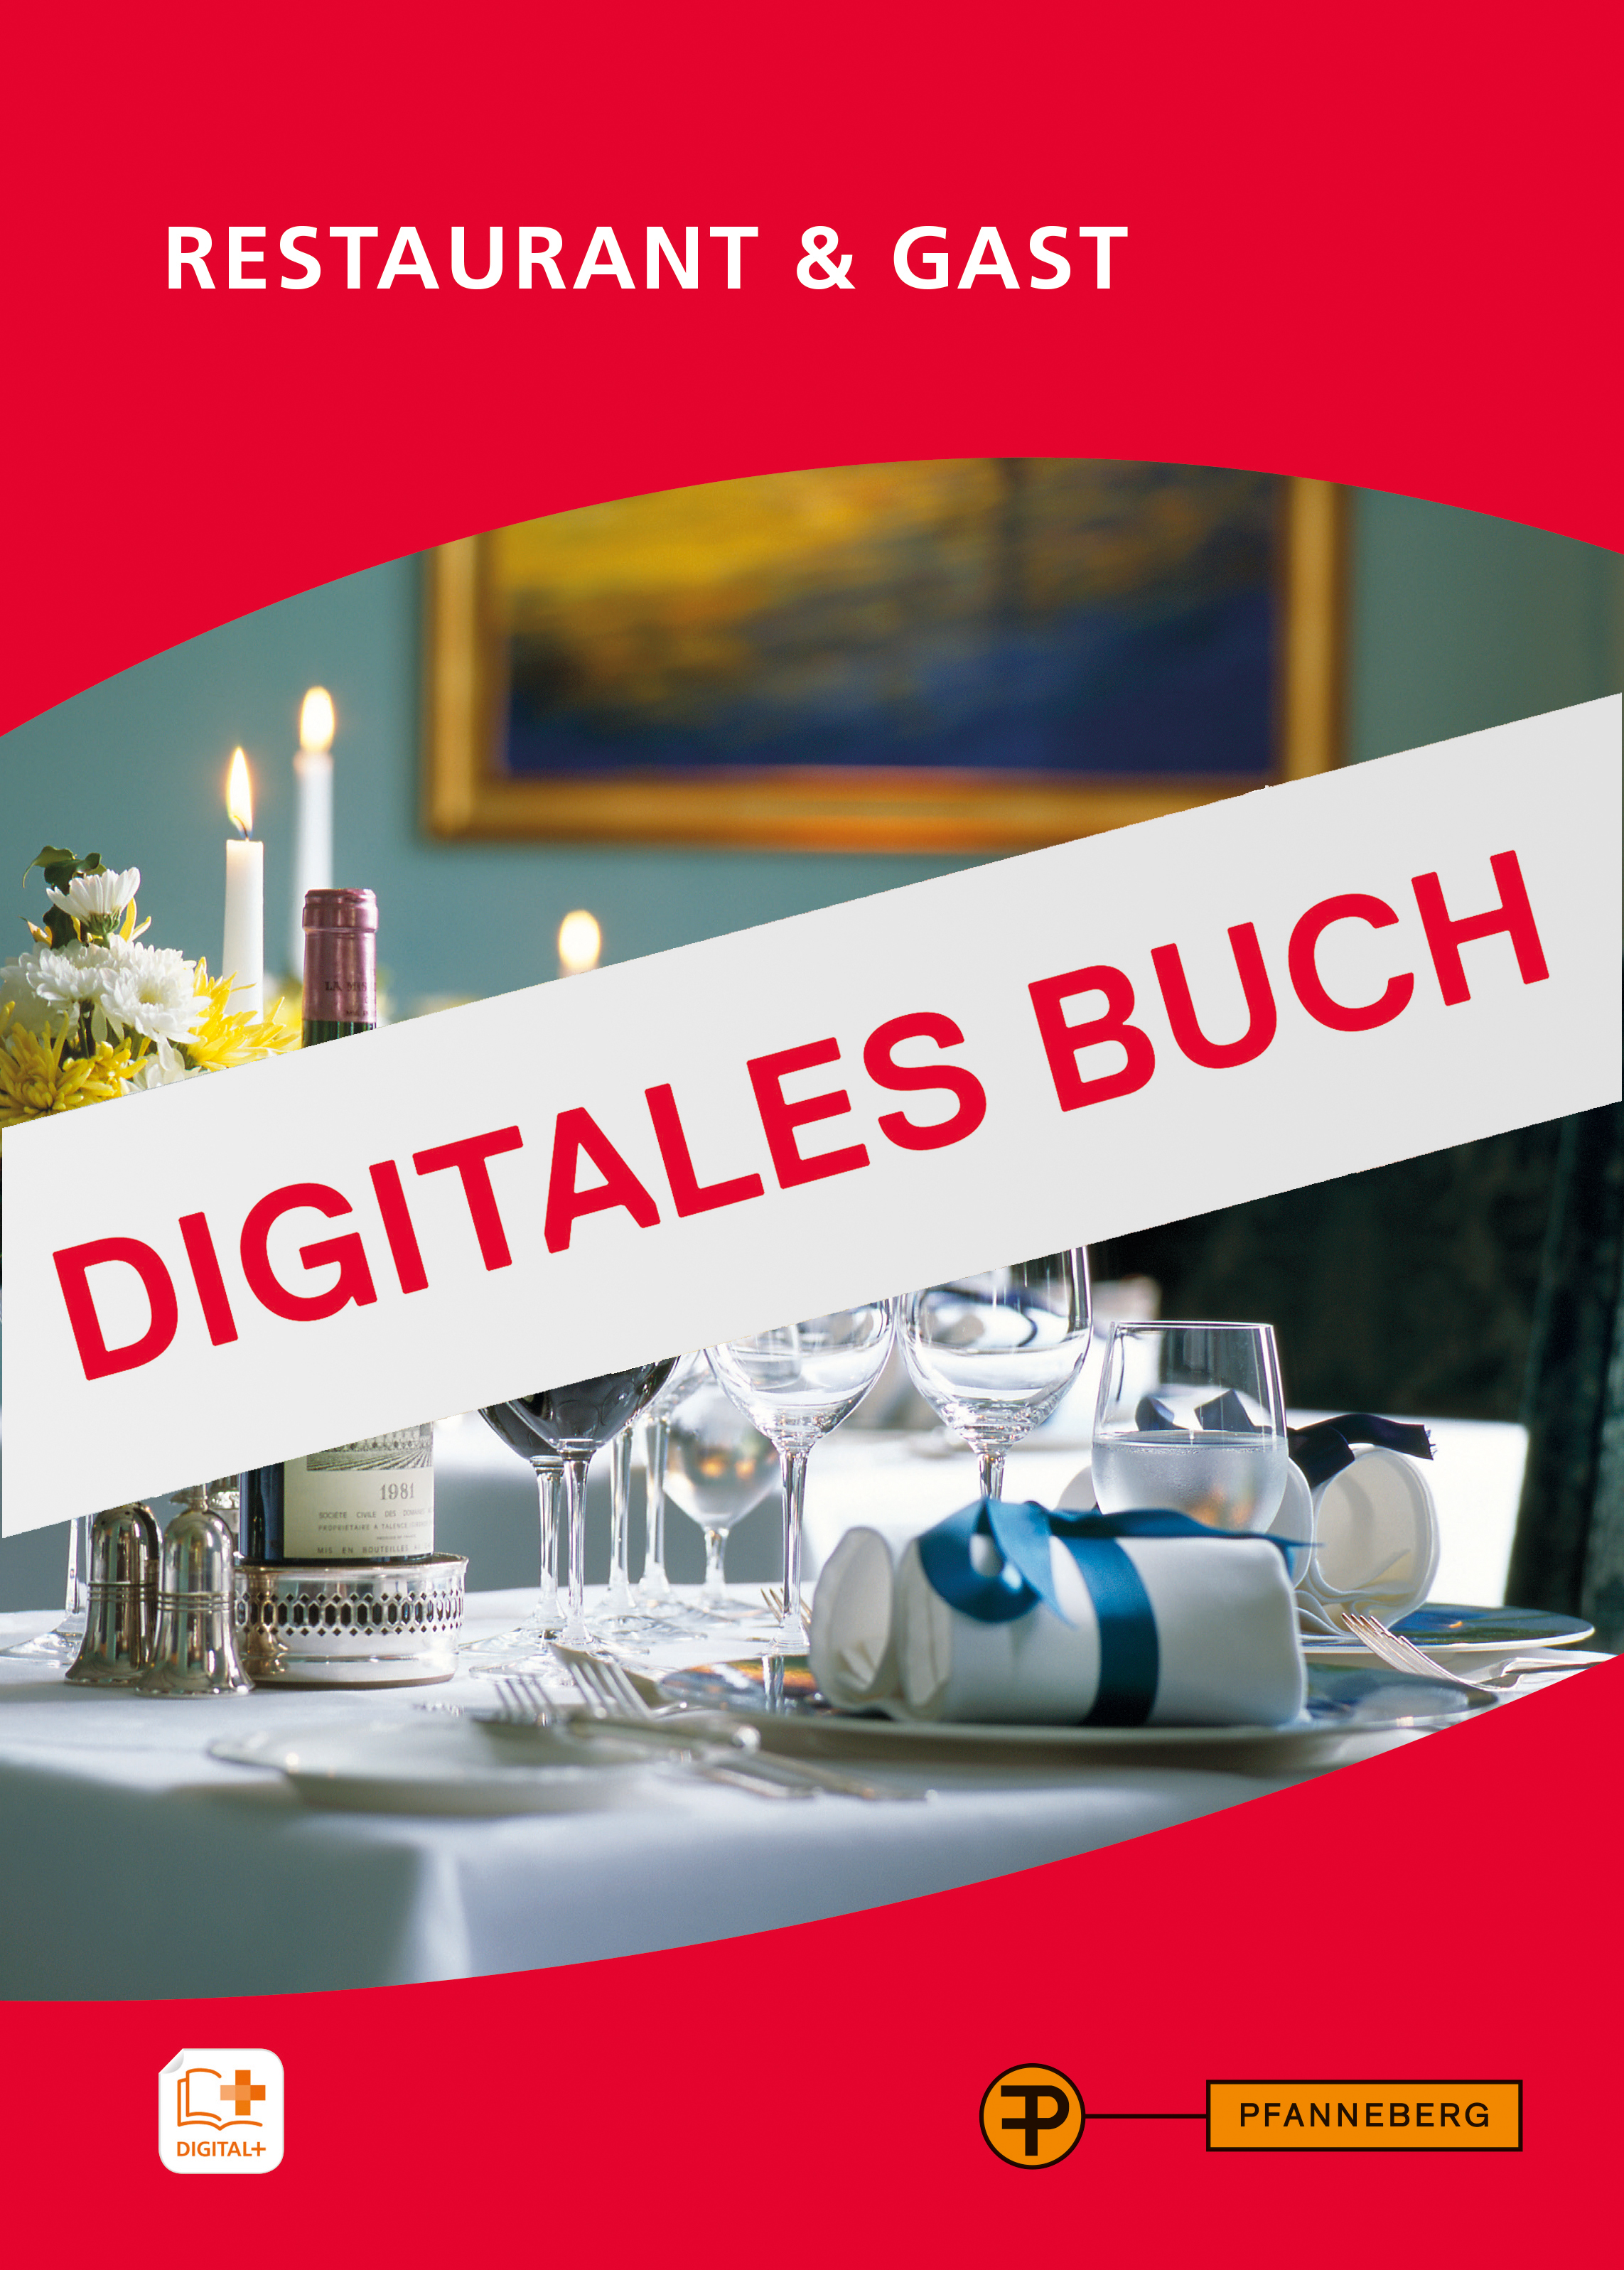 Restaurant & Gast - Digitales Buch